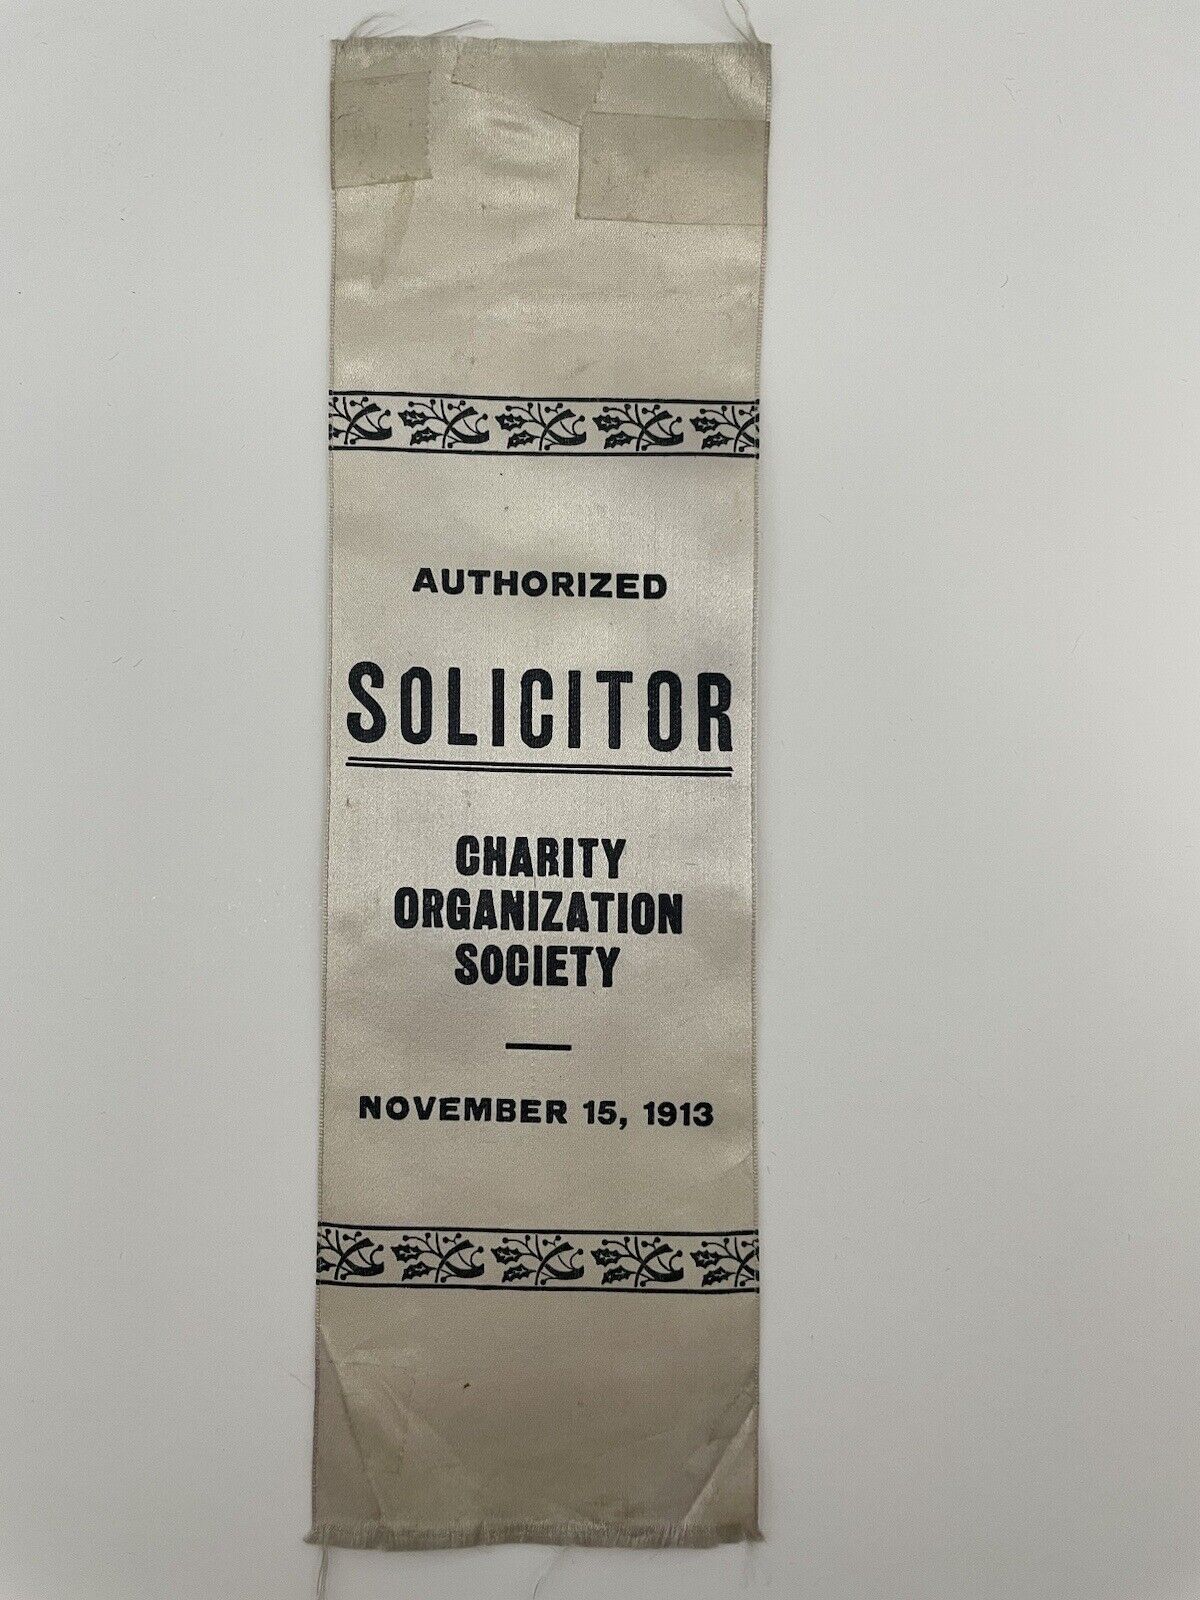 1913 Antique Historical Ephemera Ribbon Charity Organization Society